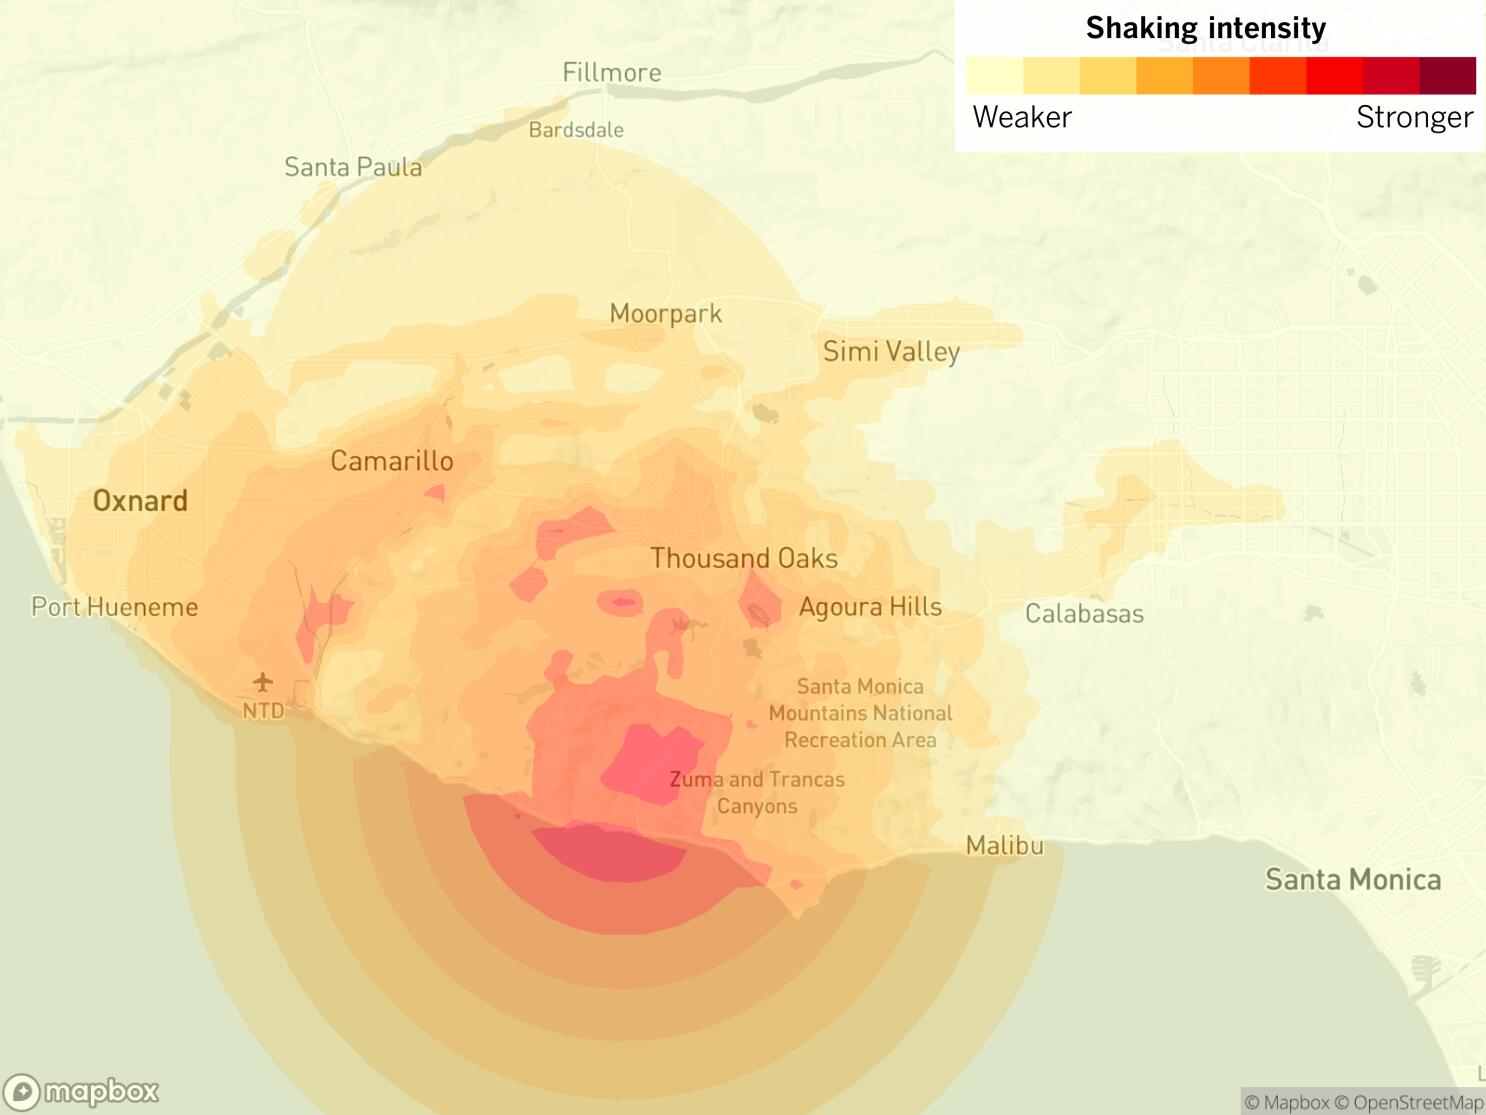 Magnitude 4.6 earthquake strikes near Malibu, rattles Southern